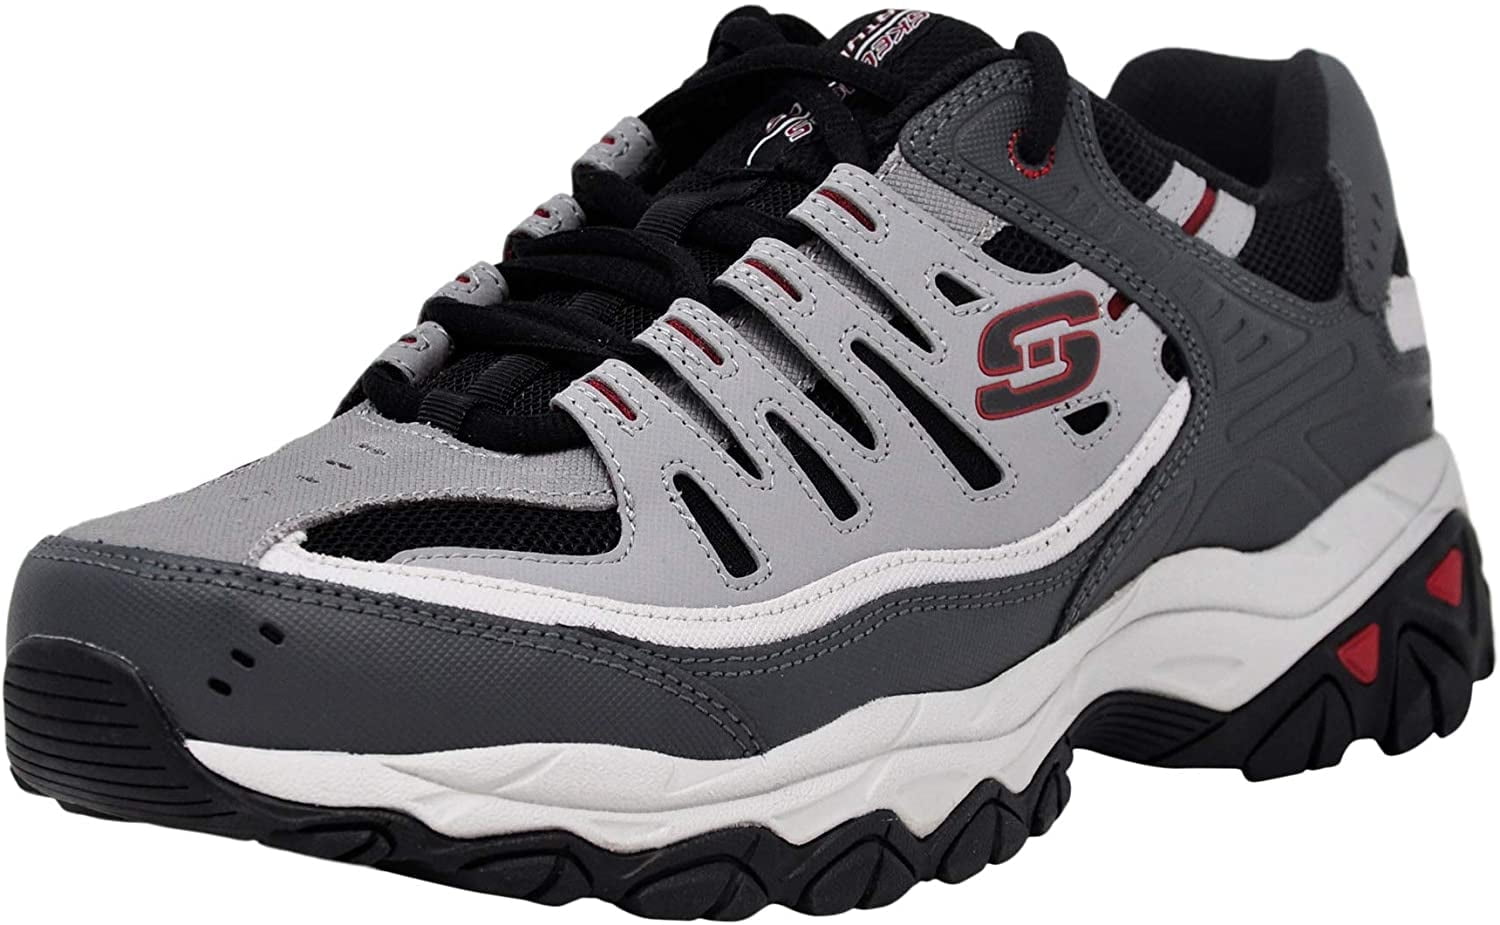 Skechers Men's Afterburn Memory-Foam Lace-up Sneaker, Charcoal/Red